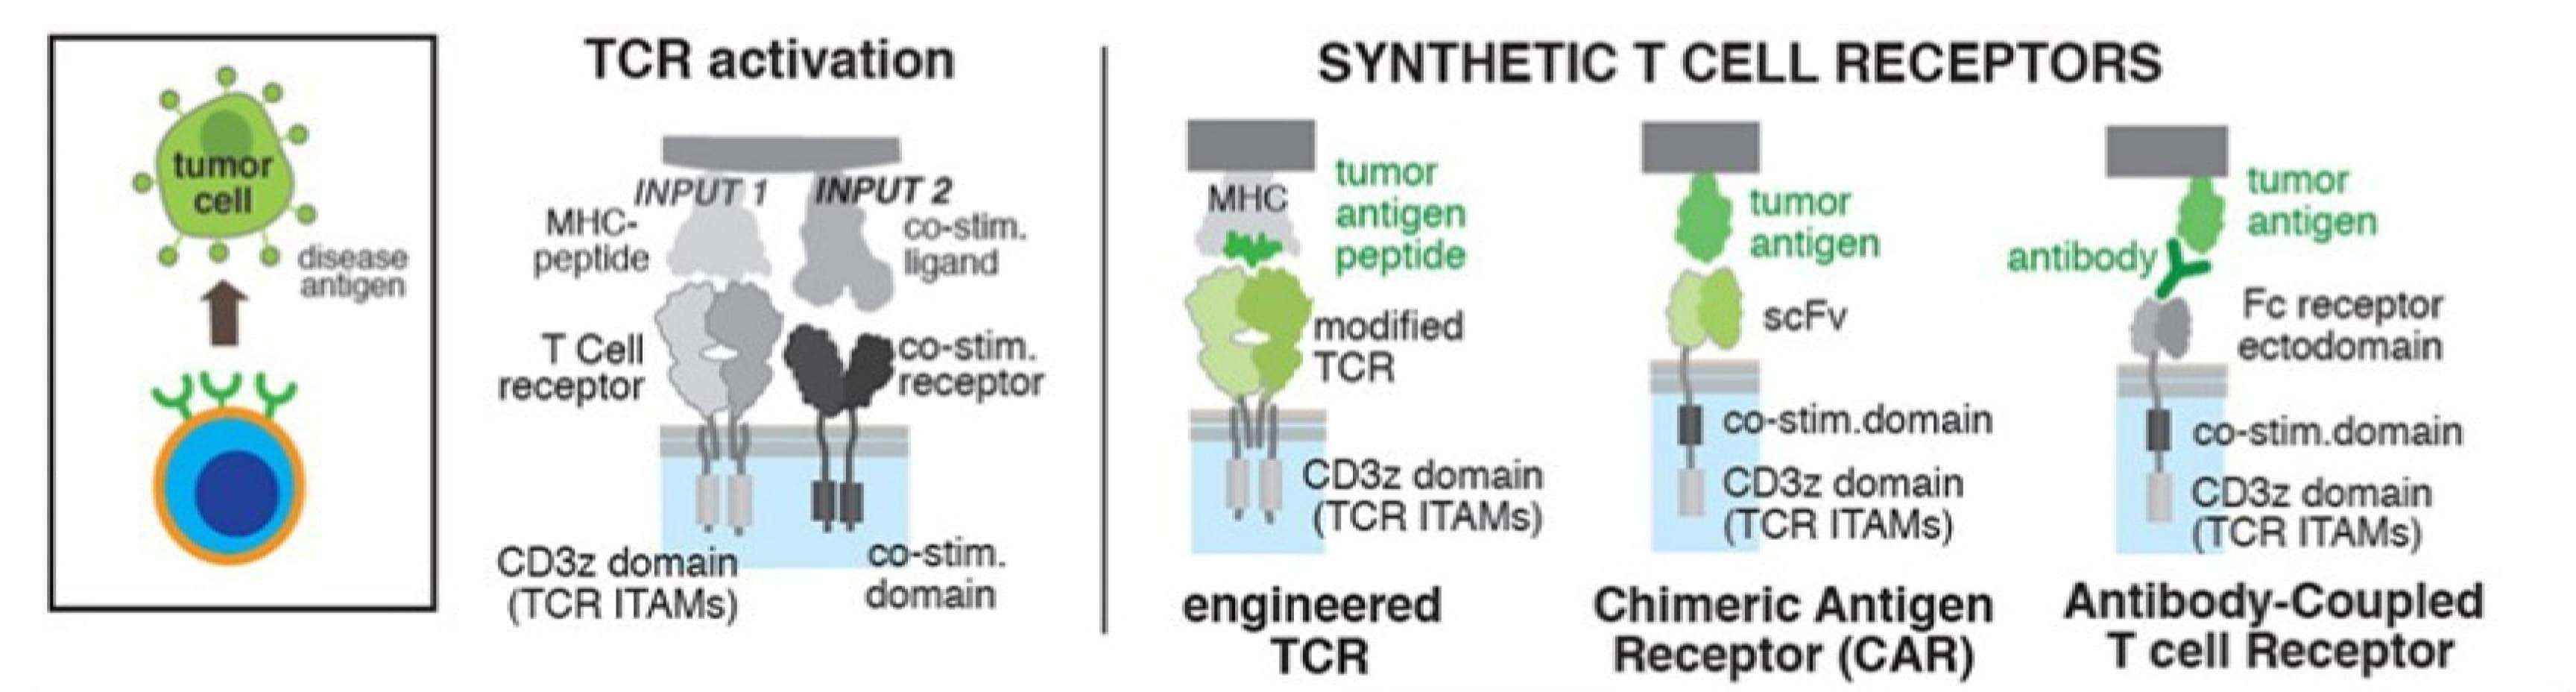 Synthetic receptor designs for targeting tumor antigens.